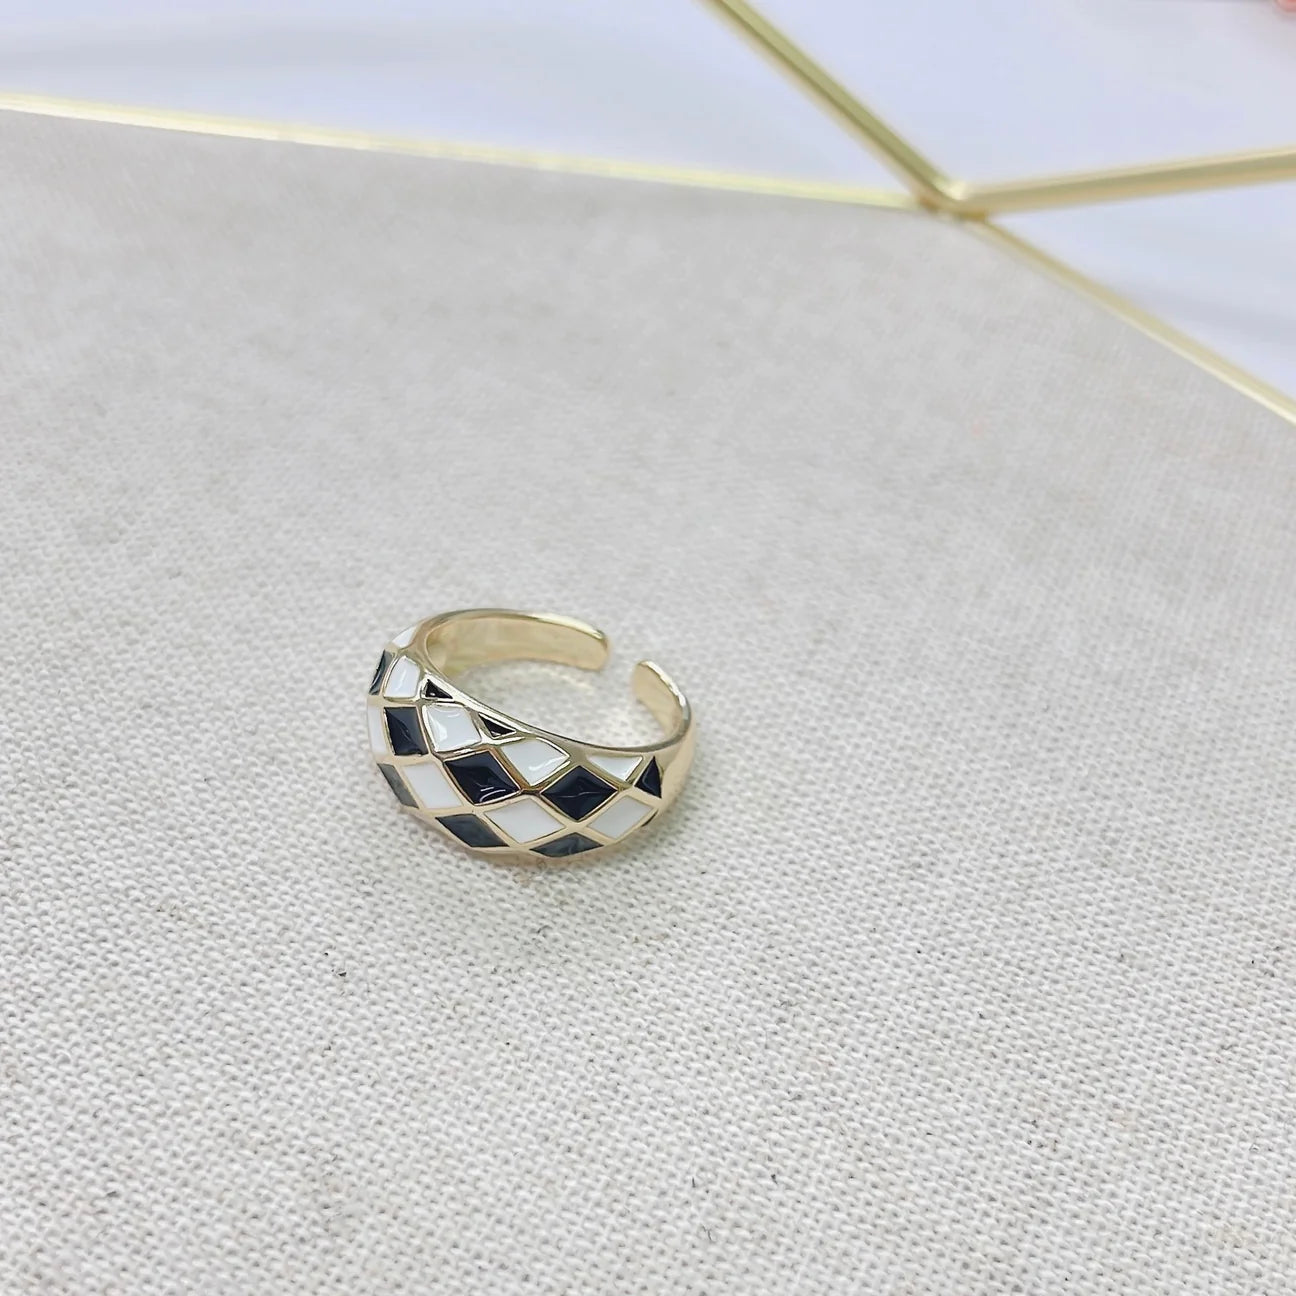 Checkered ring